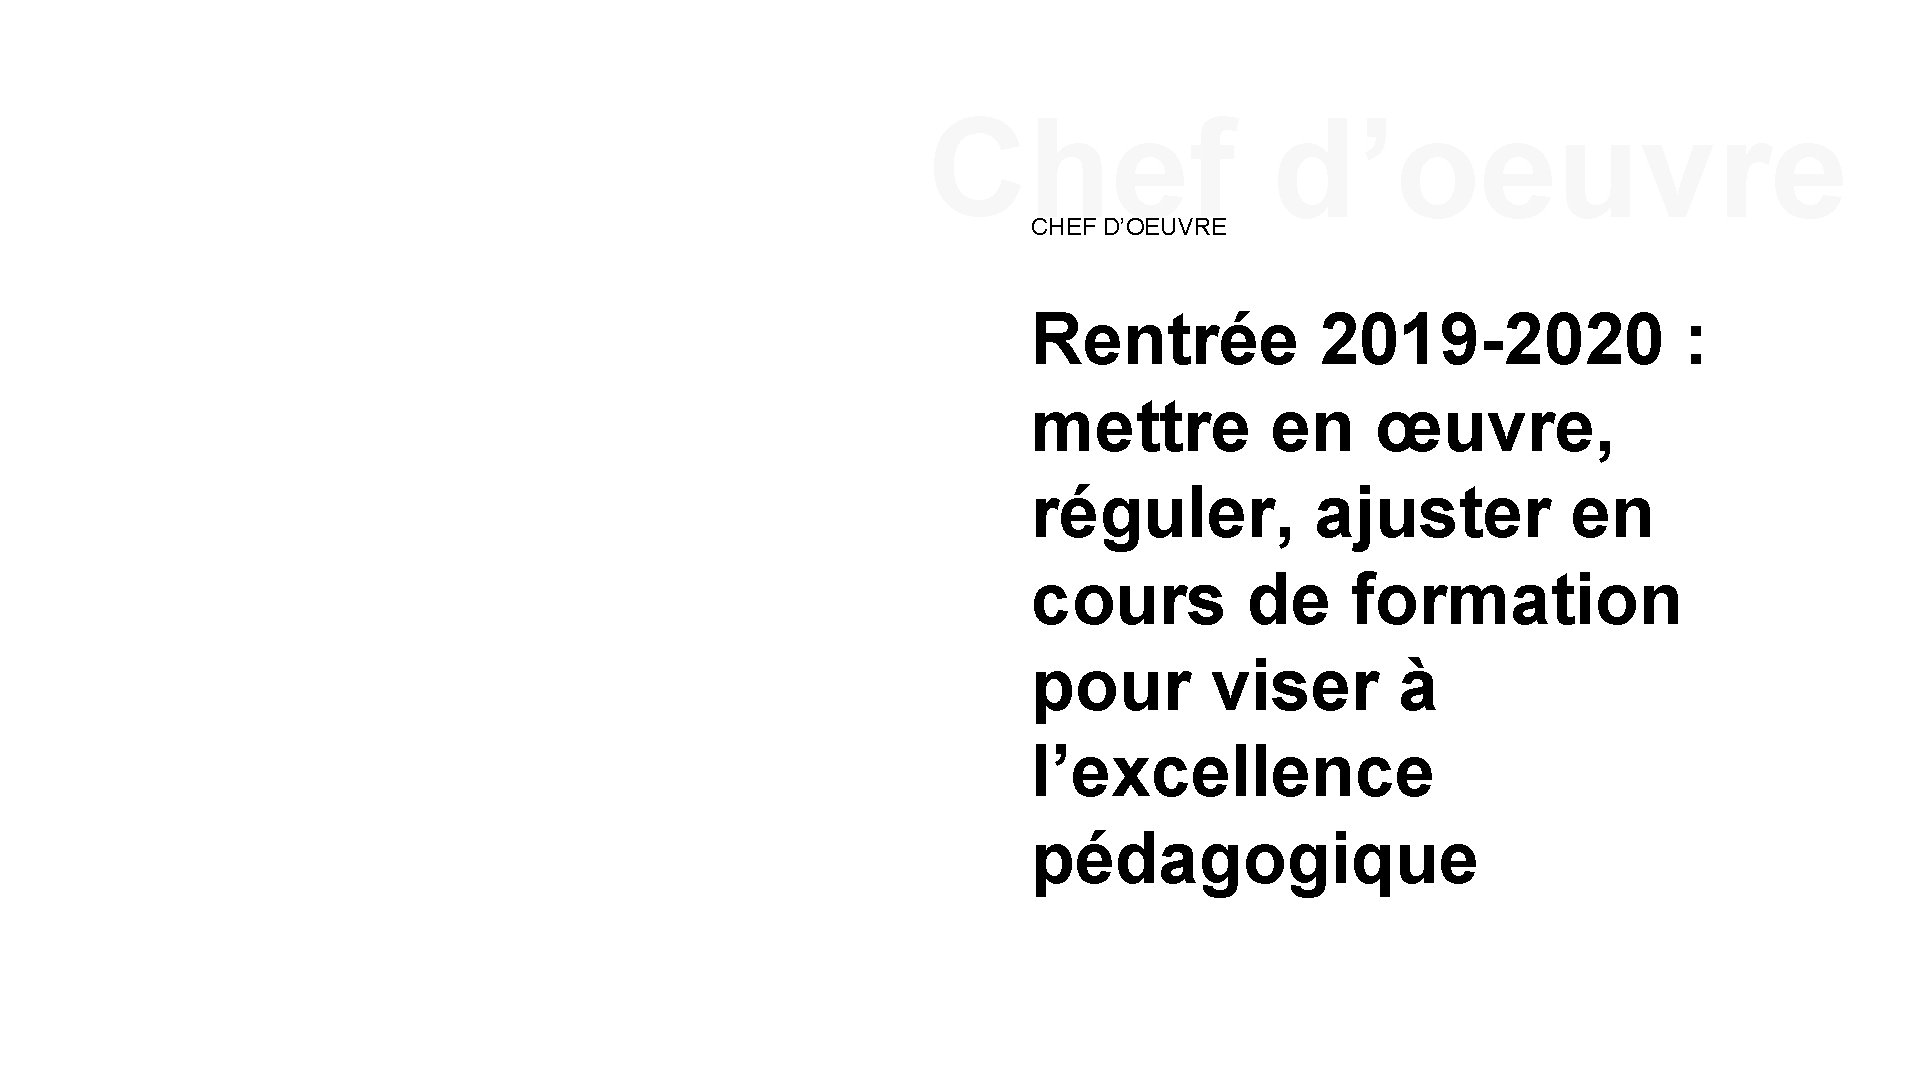 Chef d’oeuvre CHEF D’OEUVRE Rentrée 2019 -2020 : mettre en œuvre, réguler, ajuster en